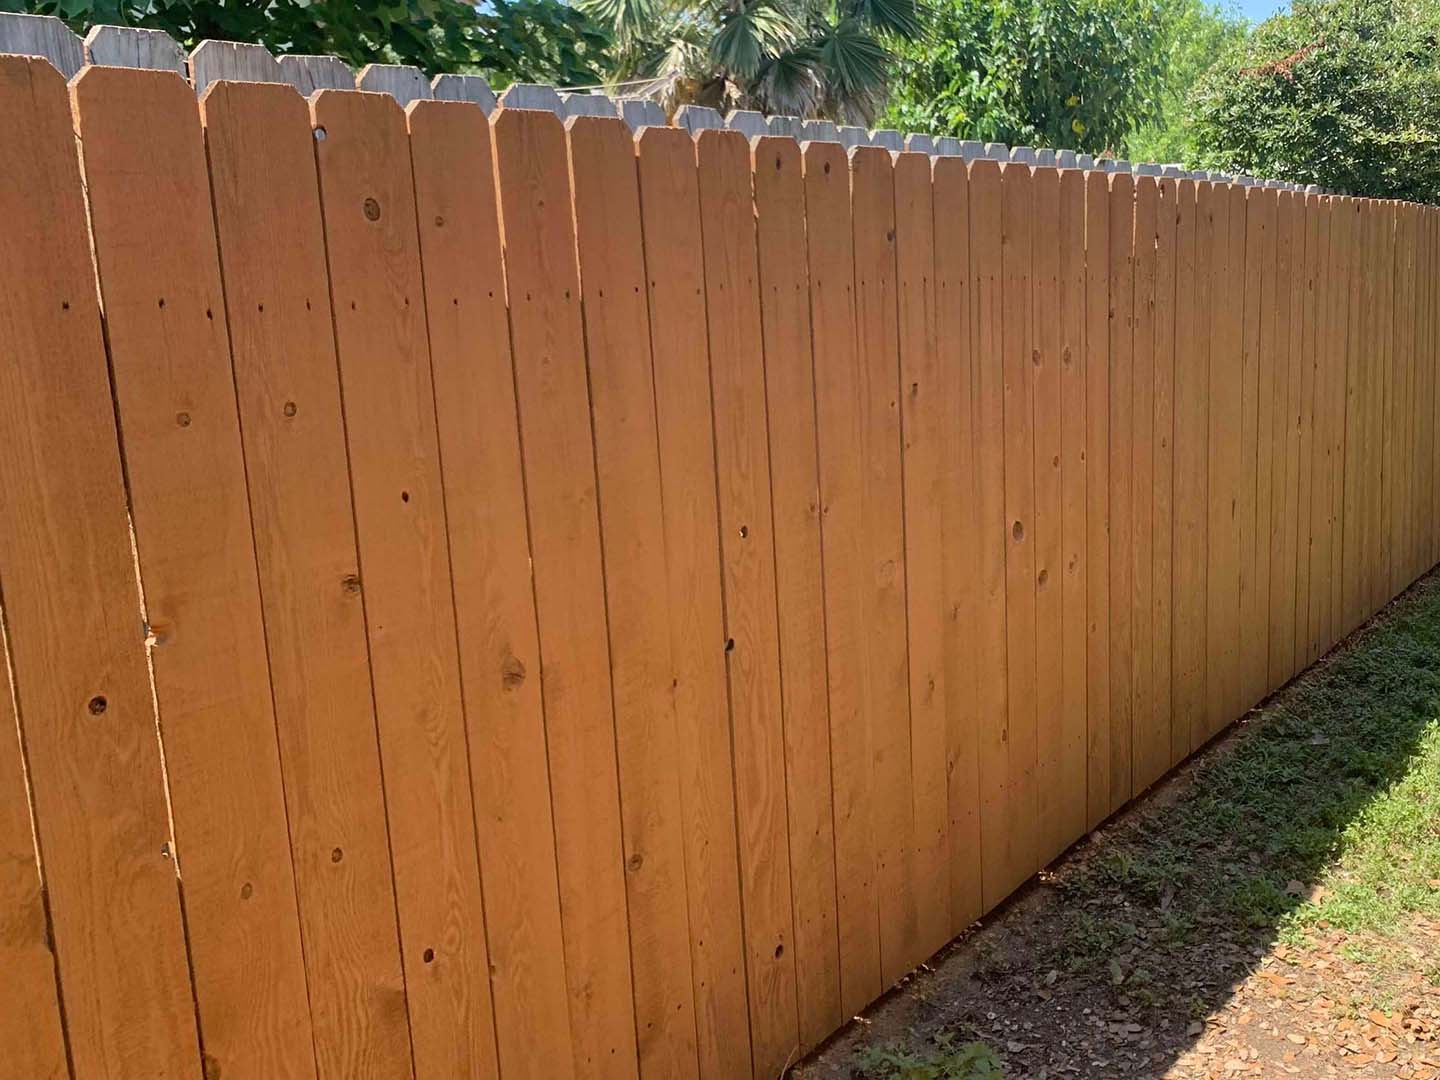 Manor TX stockade style wood fence